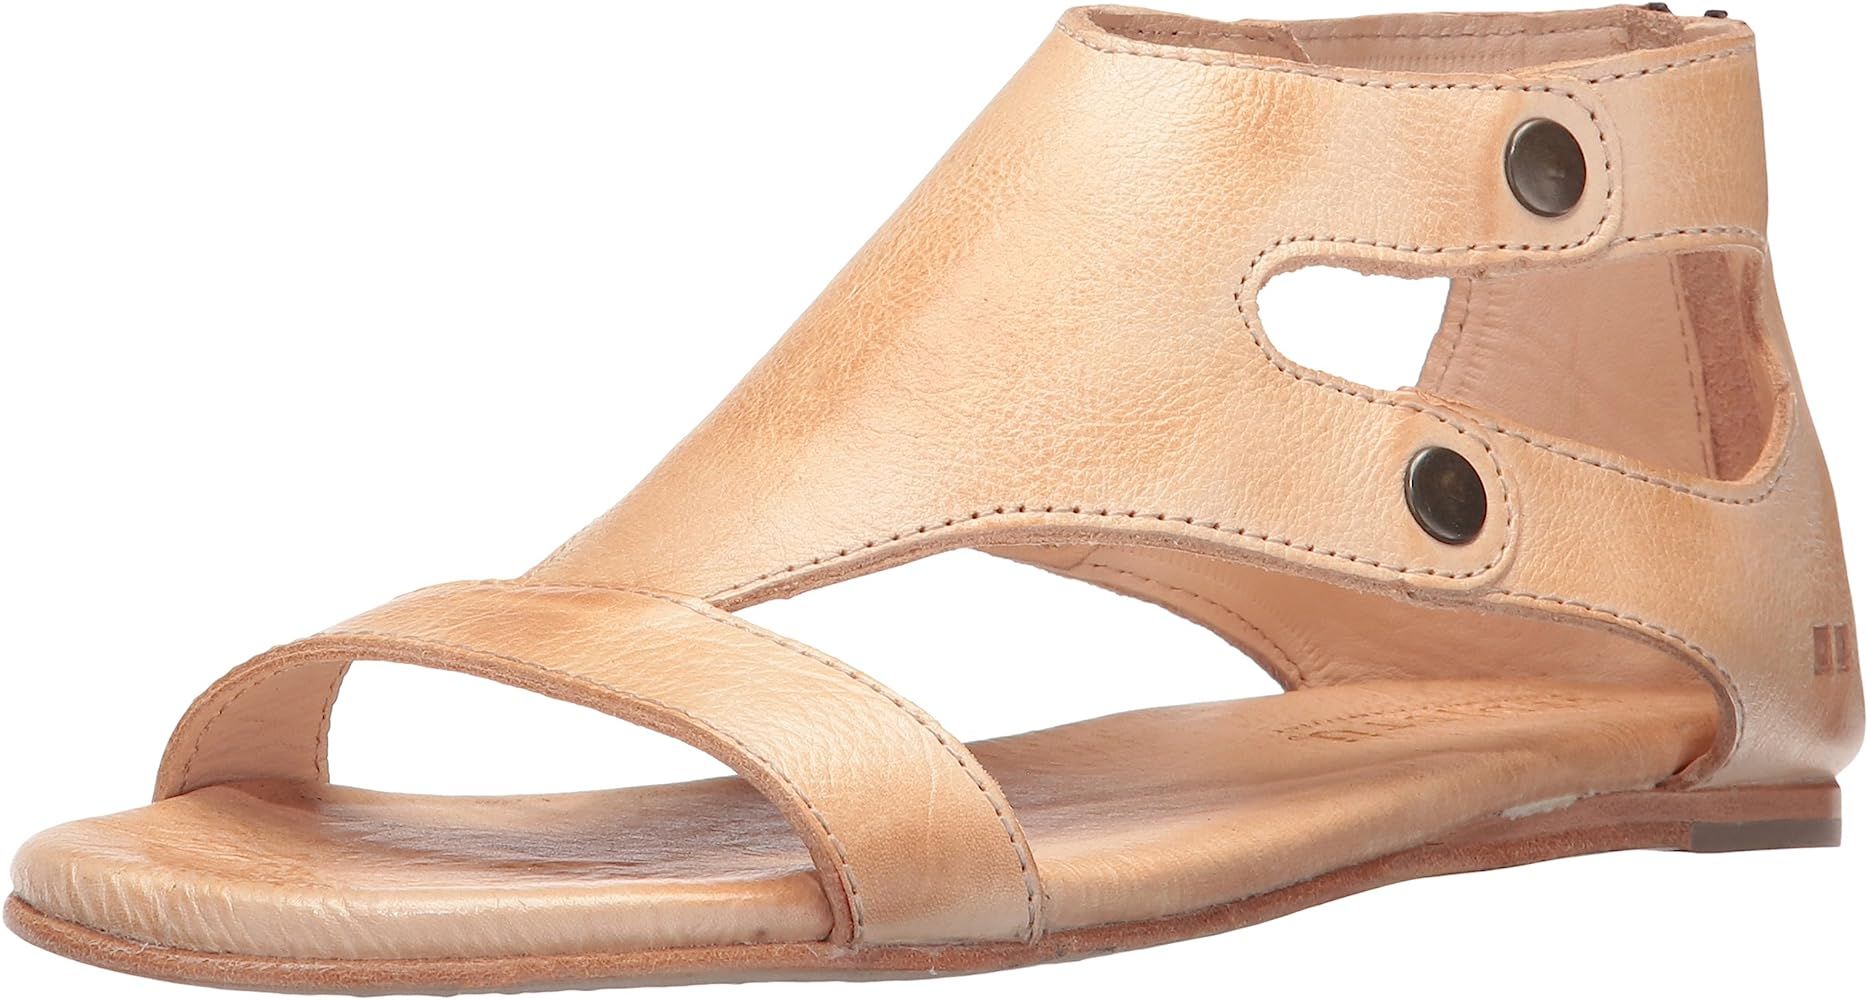 Bed|Stu Soto Women's Sandals - Leather Dress Sandal - Flat with Zipper Closure | Amazon (US)